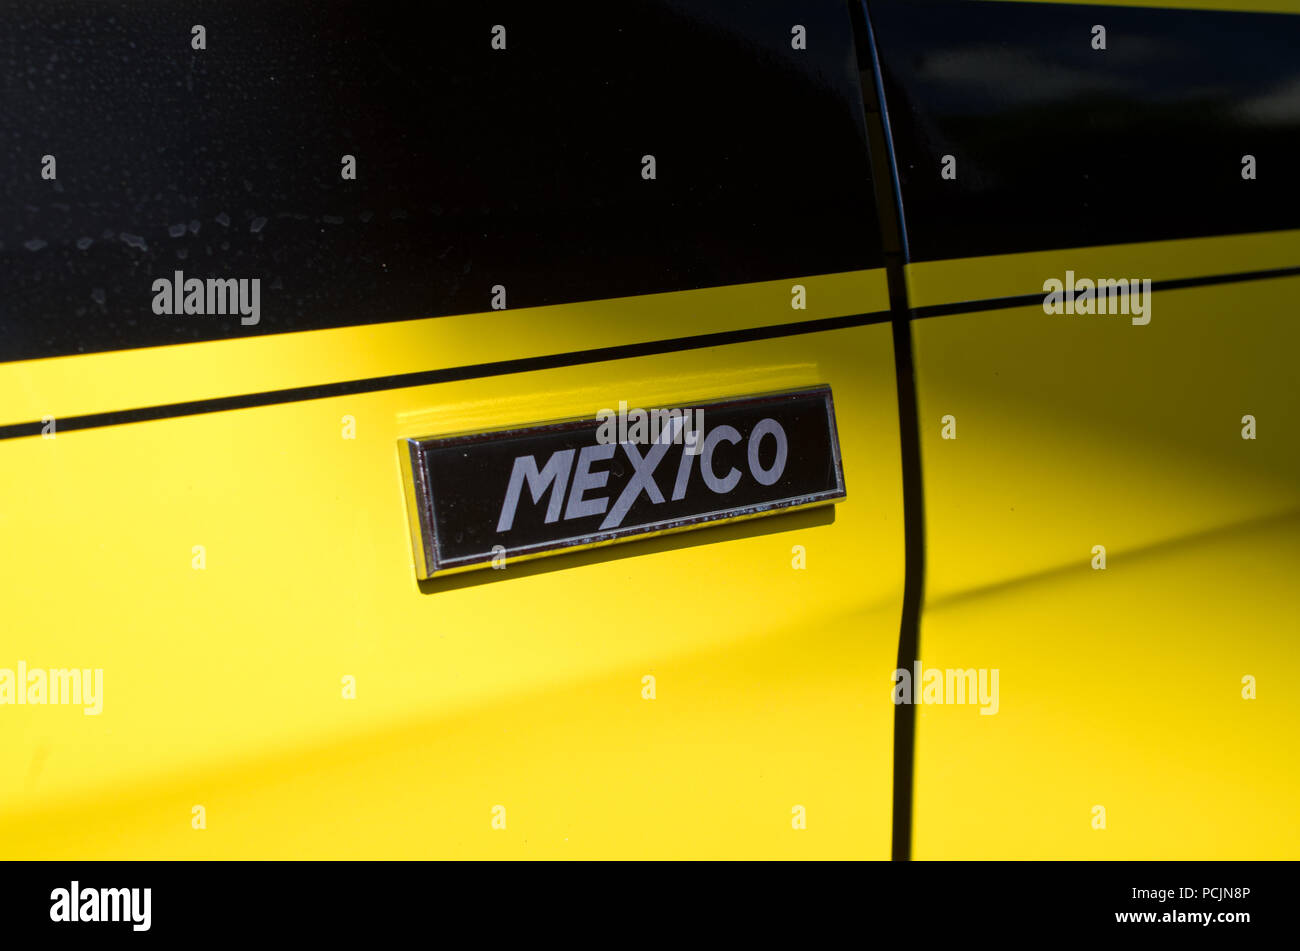 Mk1 Ford Escort Mexico classic British Sports Car UK Stock Photo